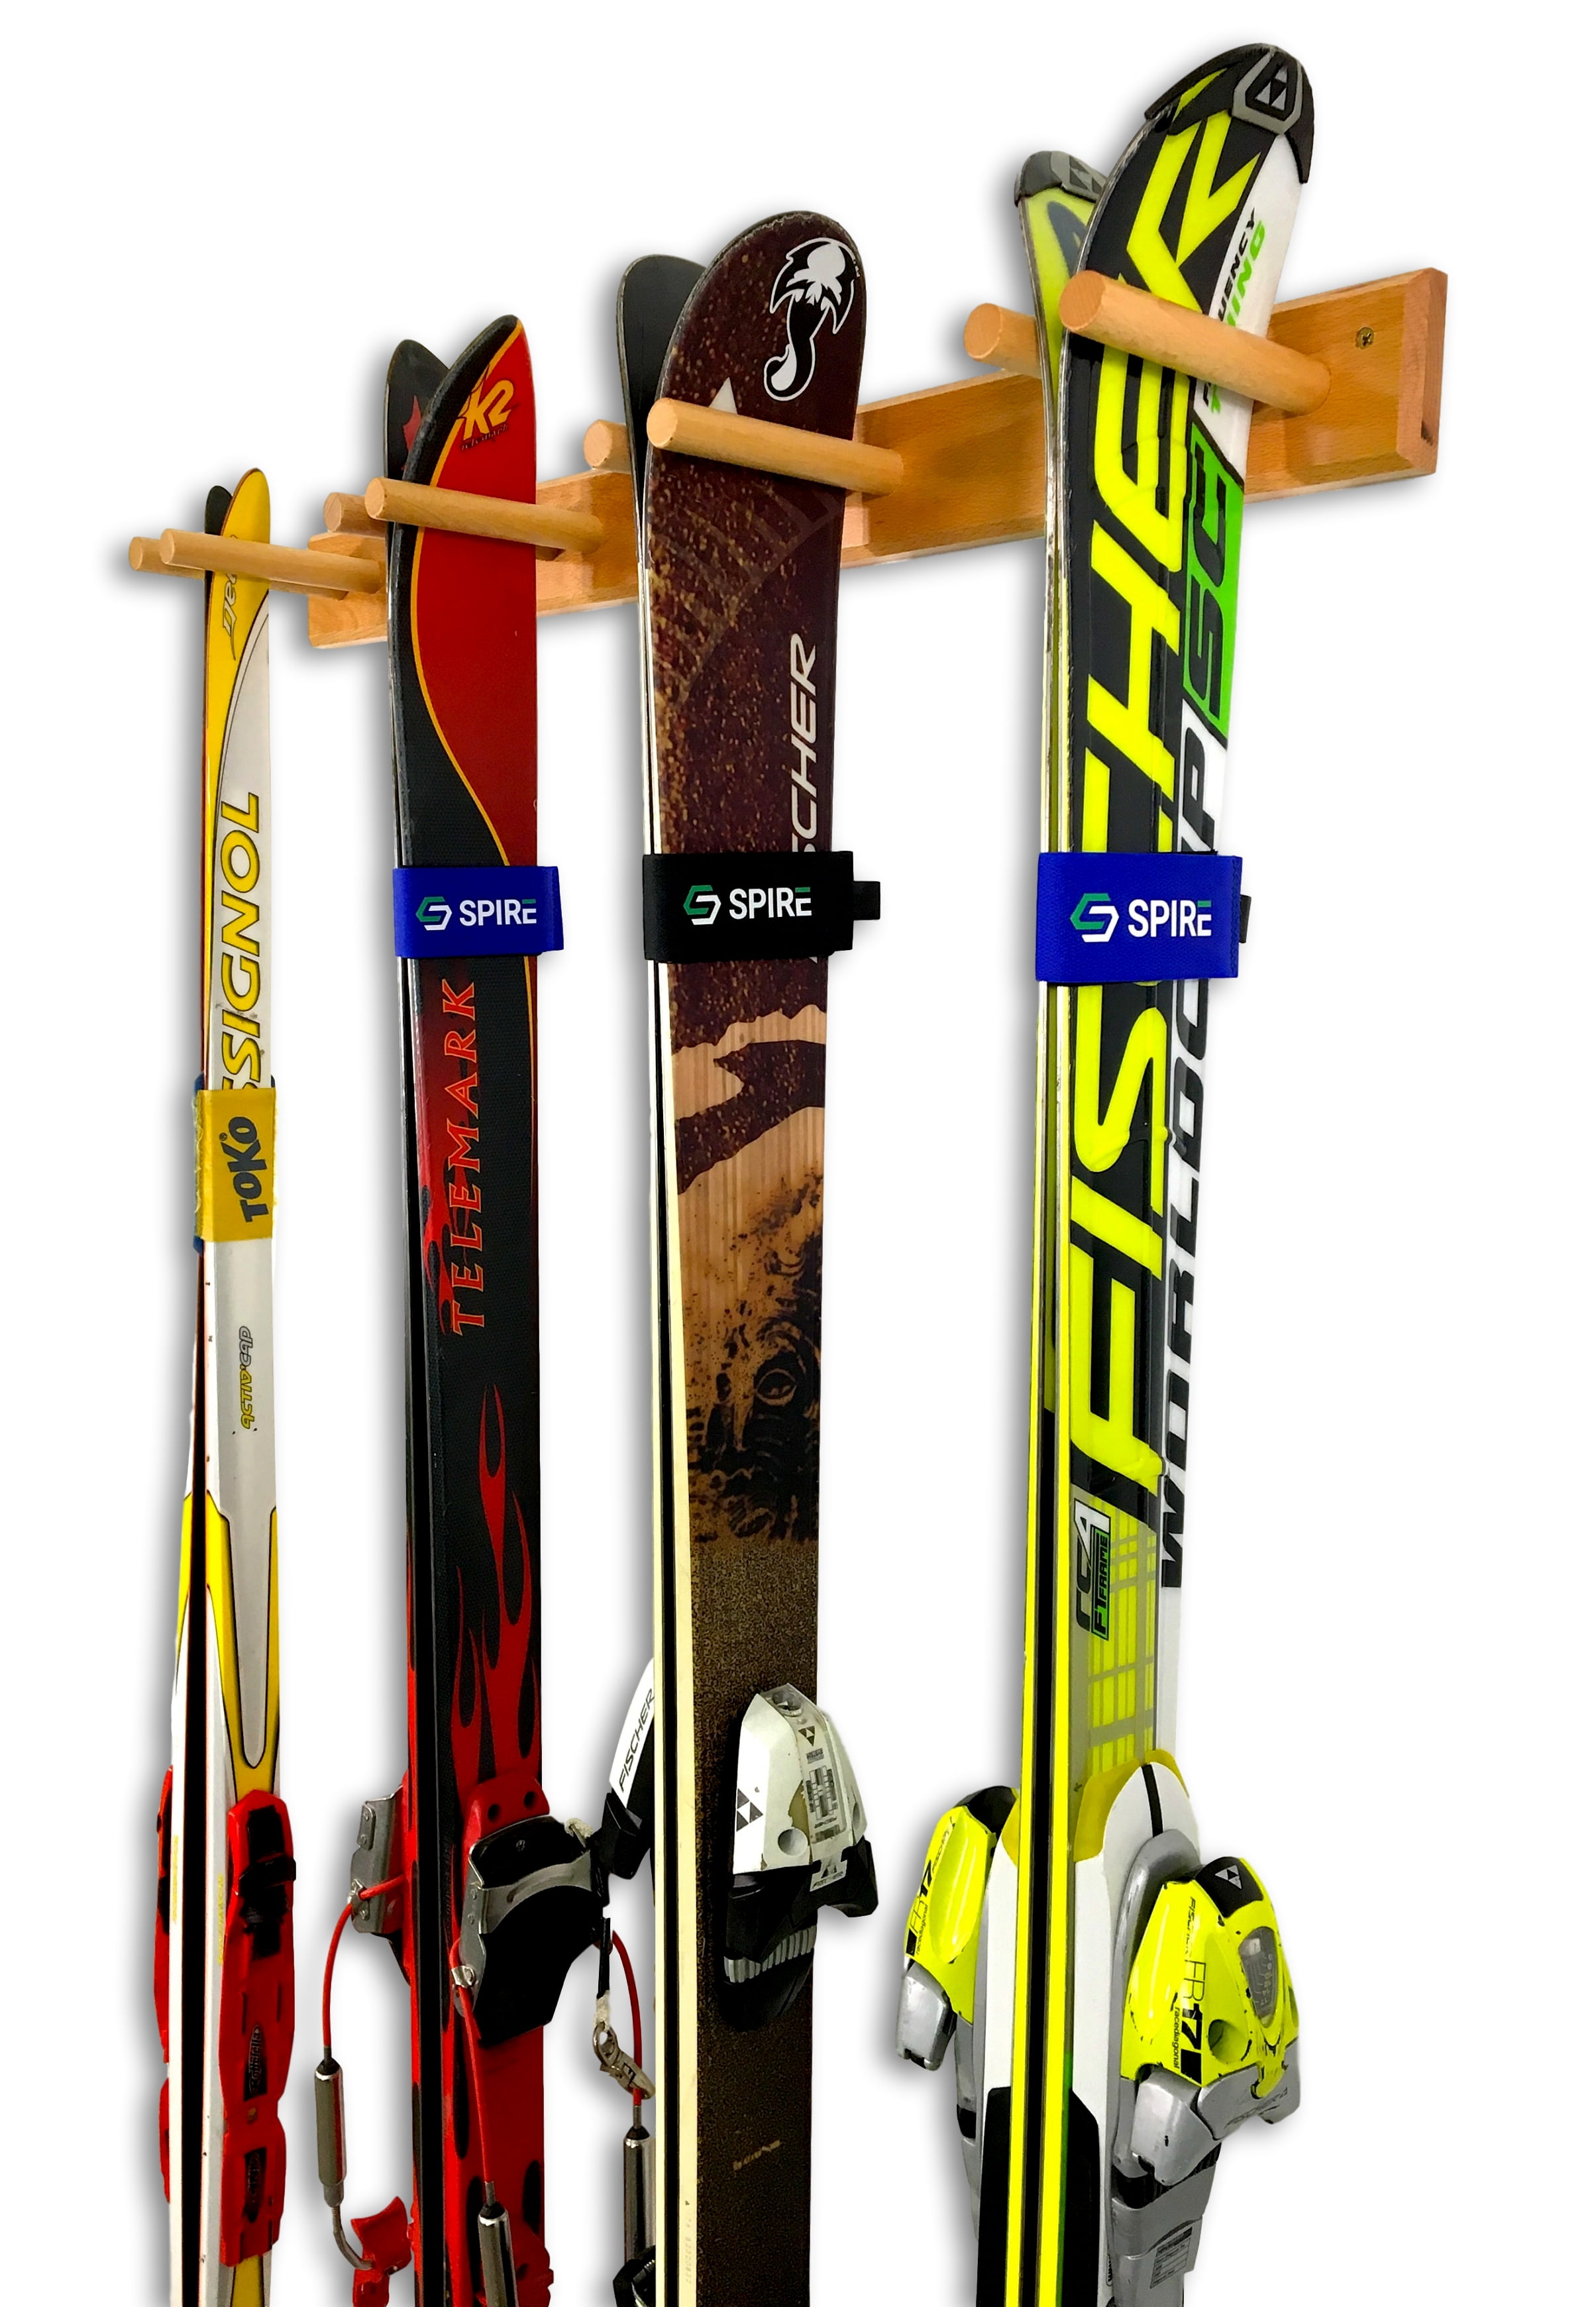 YYST Ski Wall Mount Ski Wall Holder Ski Storage Rack No Scratches No Skis and Poles 